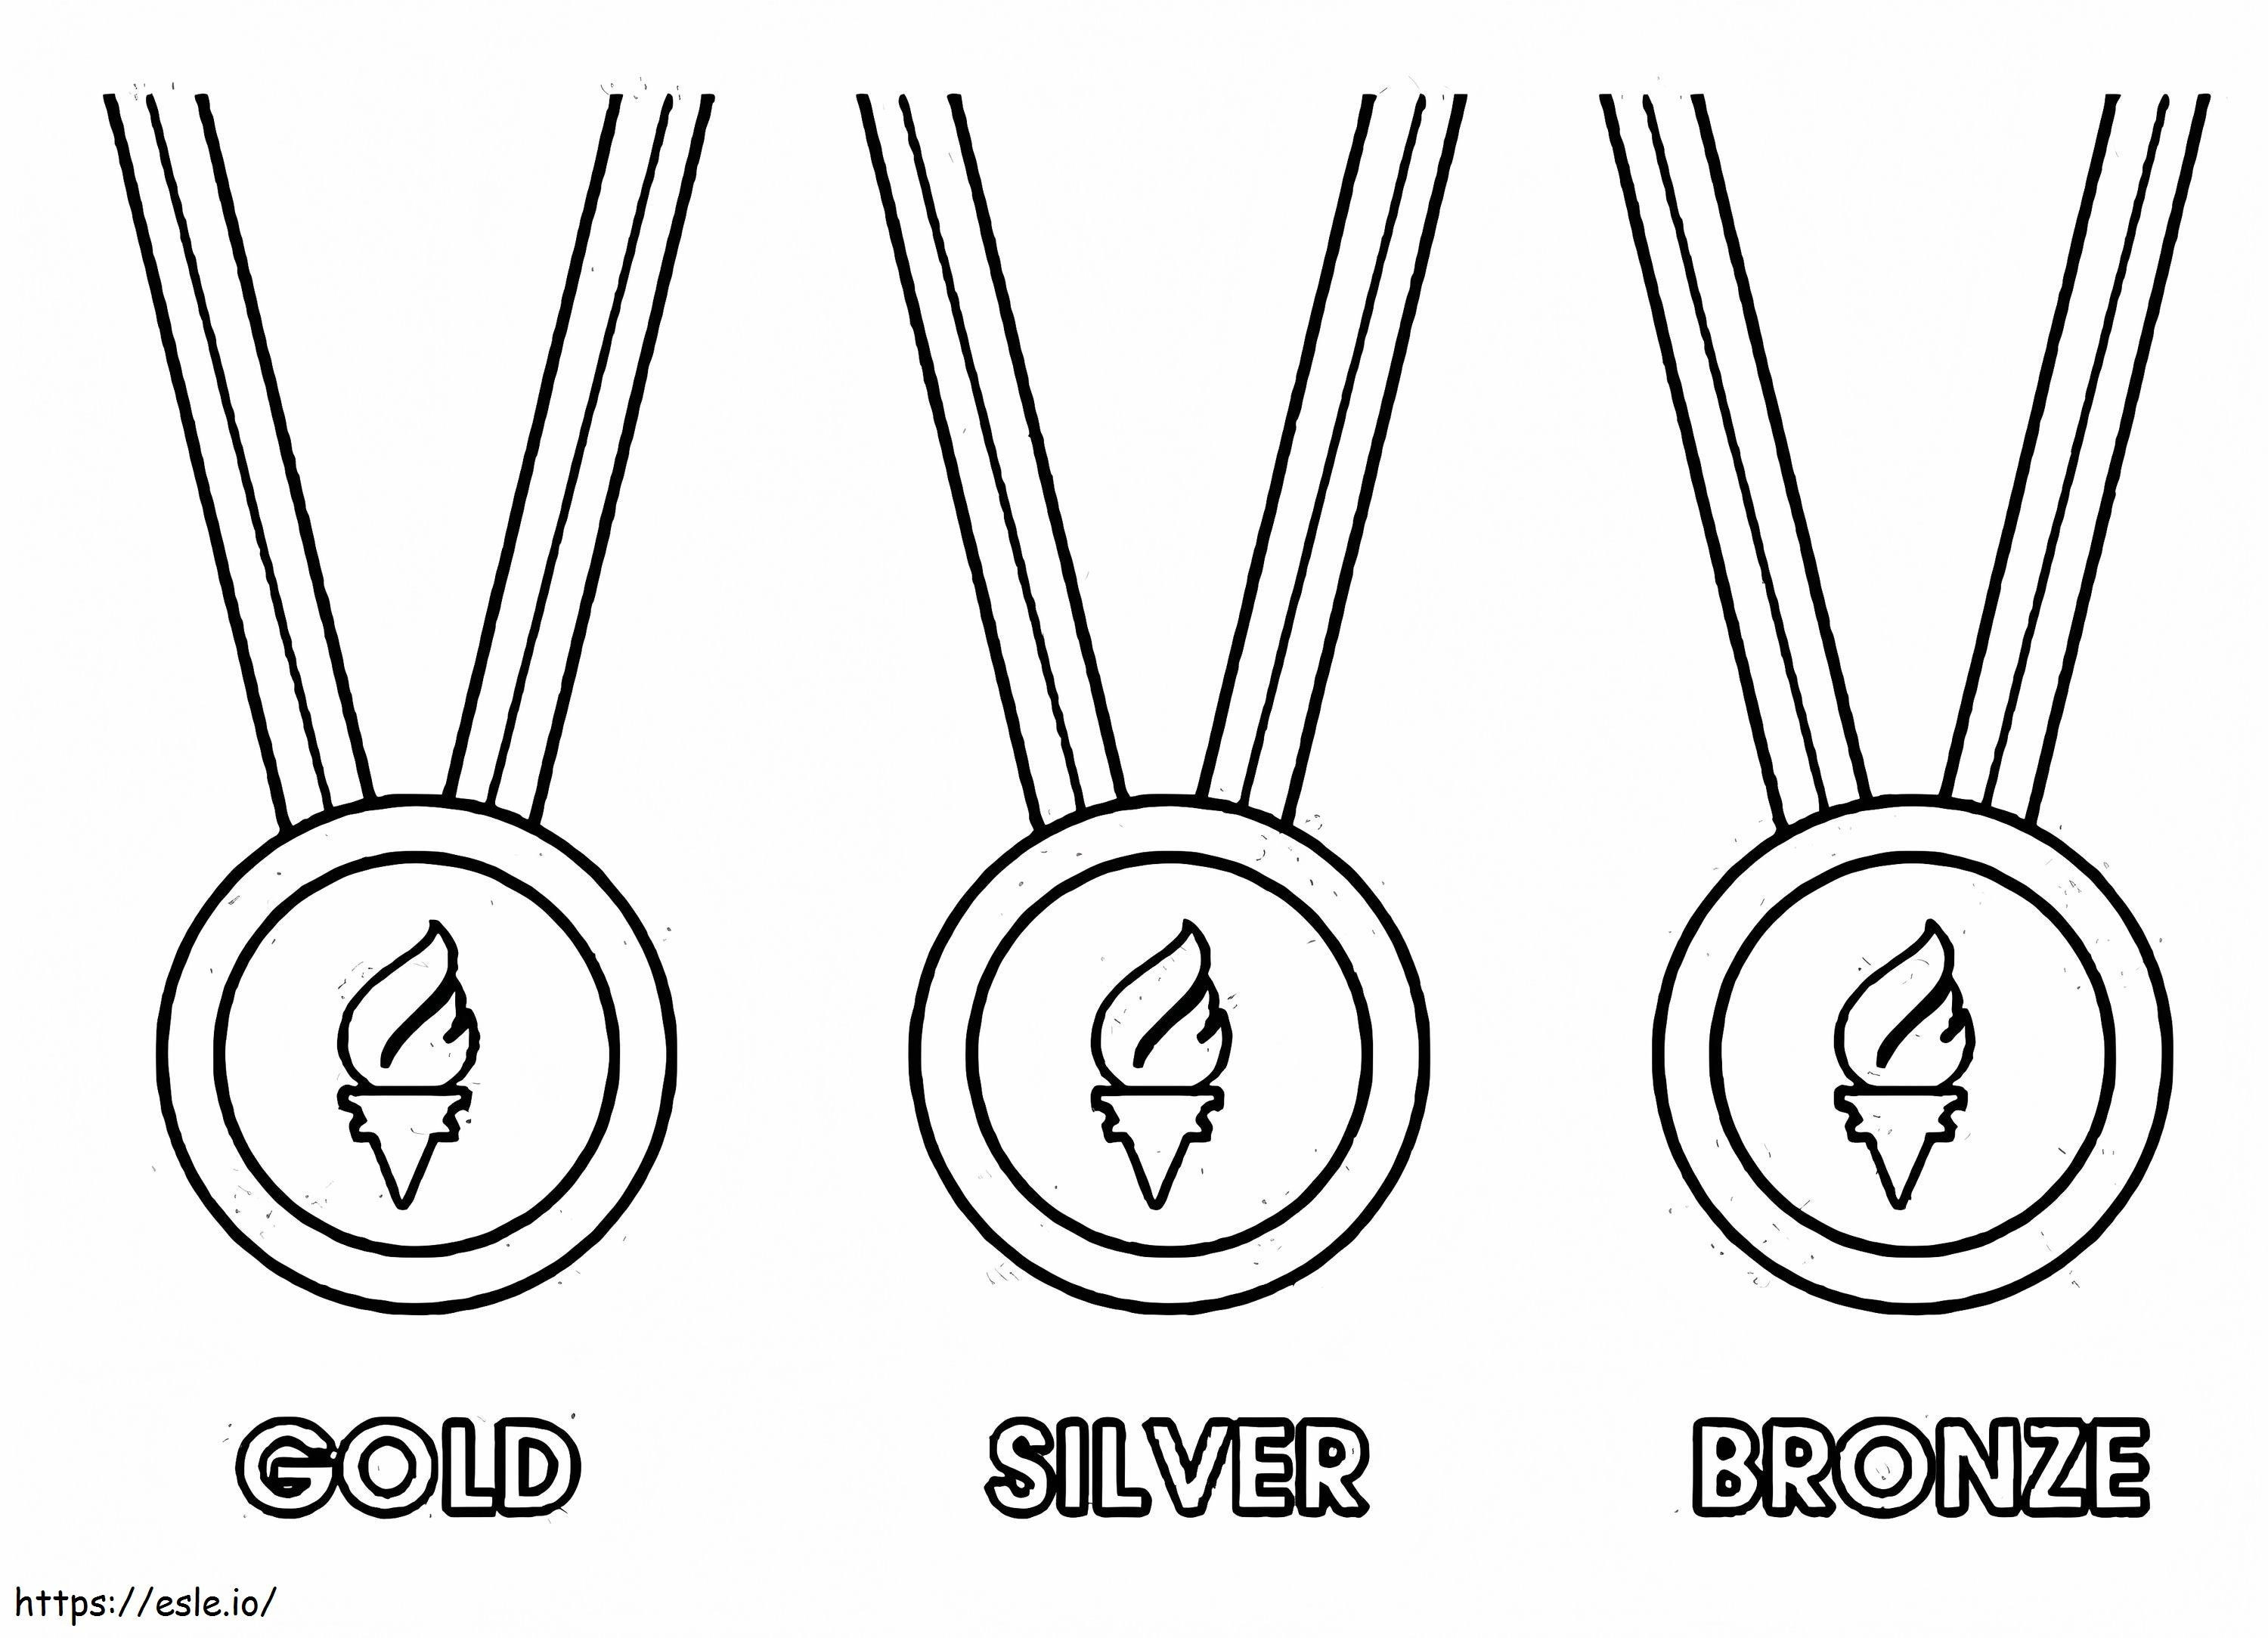 Medale olimpijskie kolorowanka